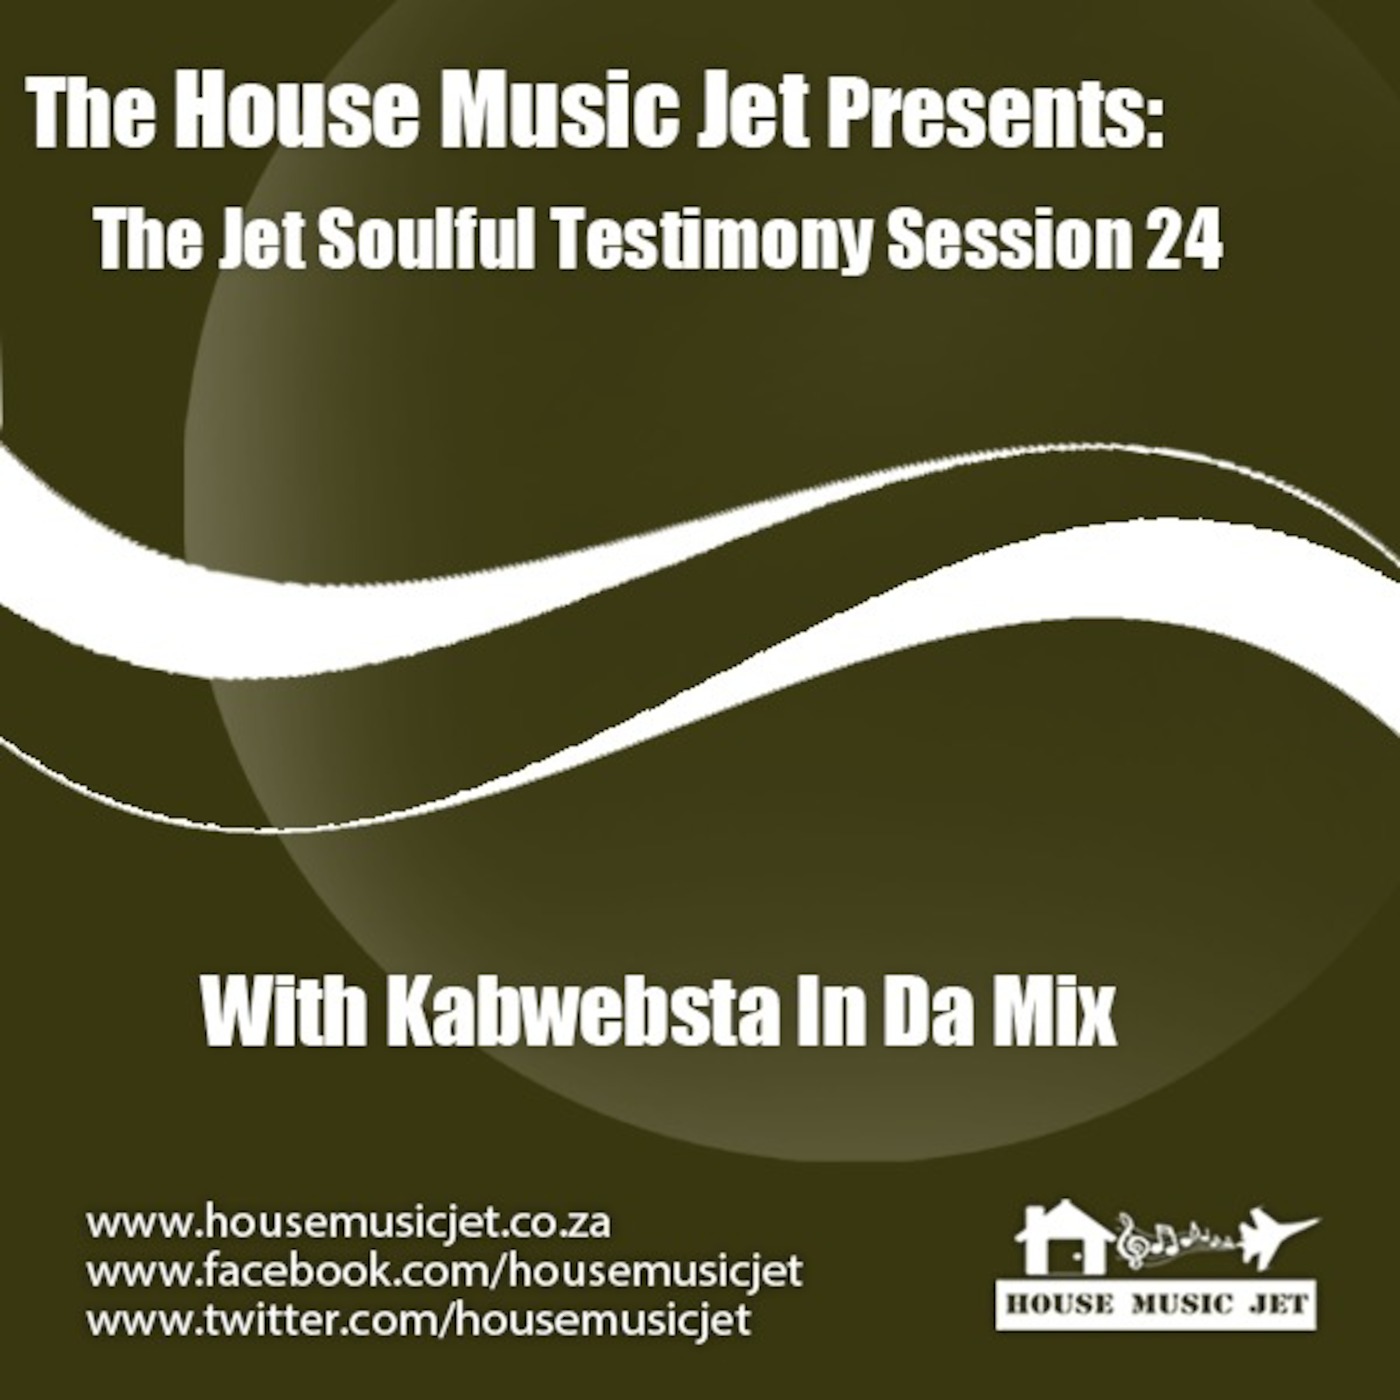 Kabwebsta In Da Mix – The Jet Soulful Testimony Session 24